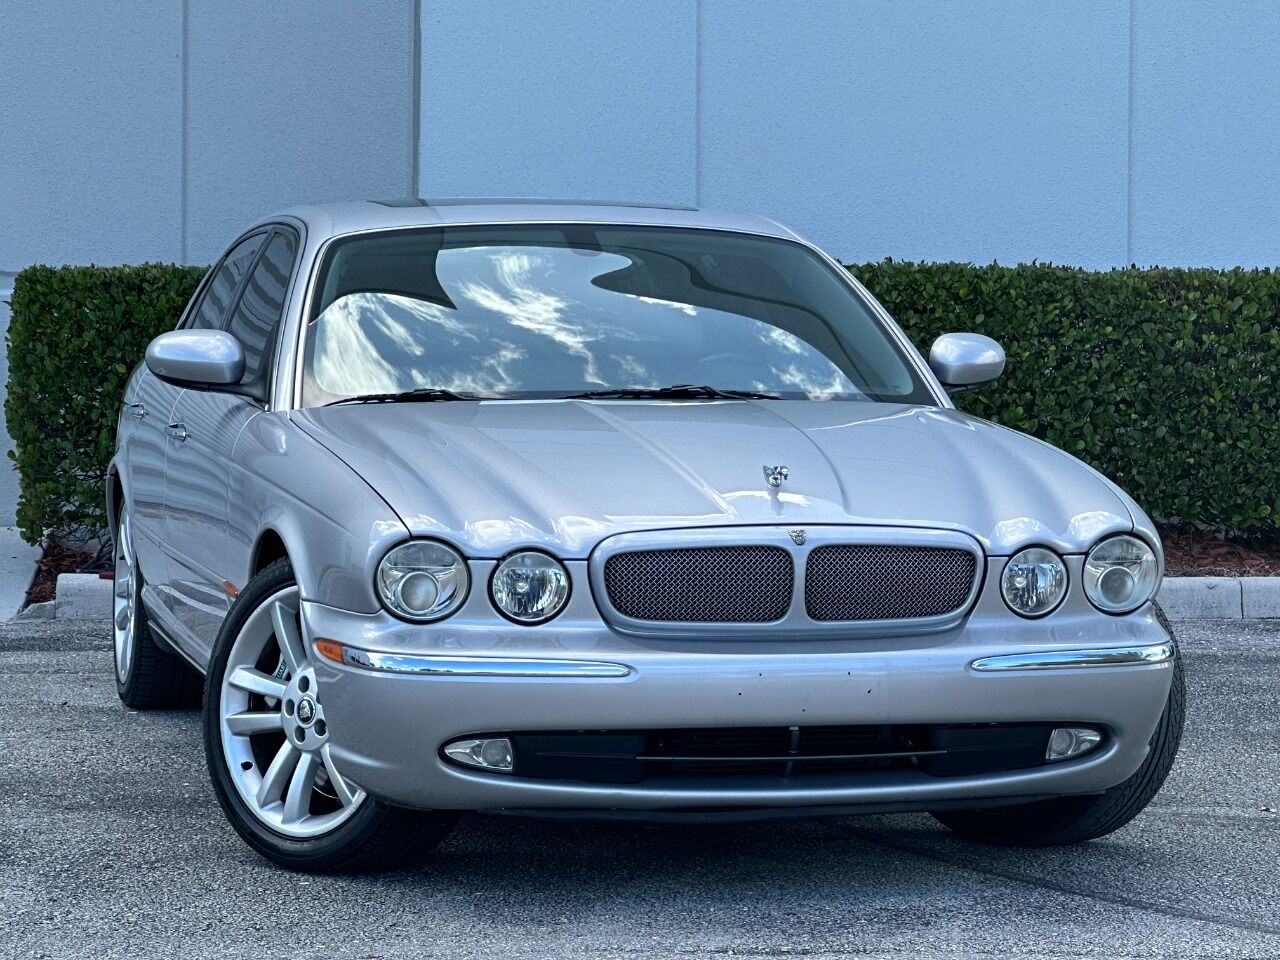 2004 Jaguar XJR Sedan - $13,900